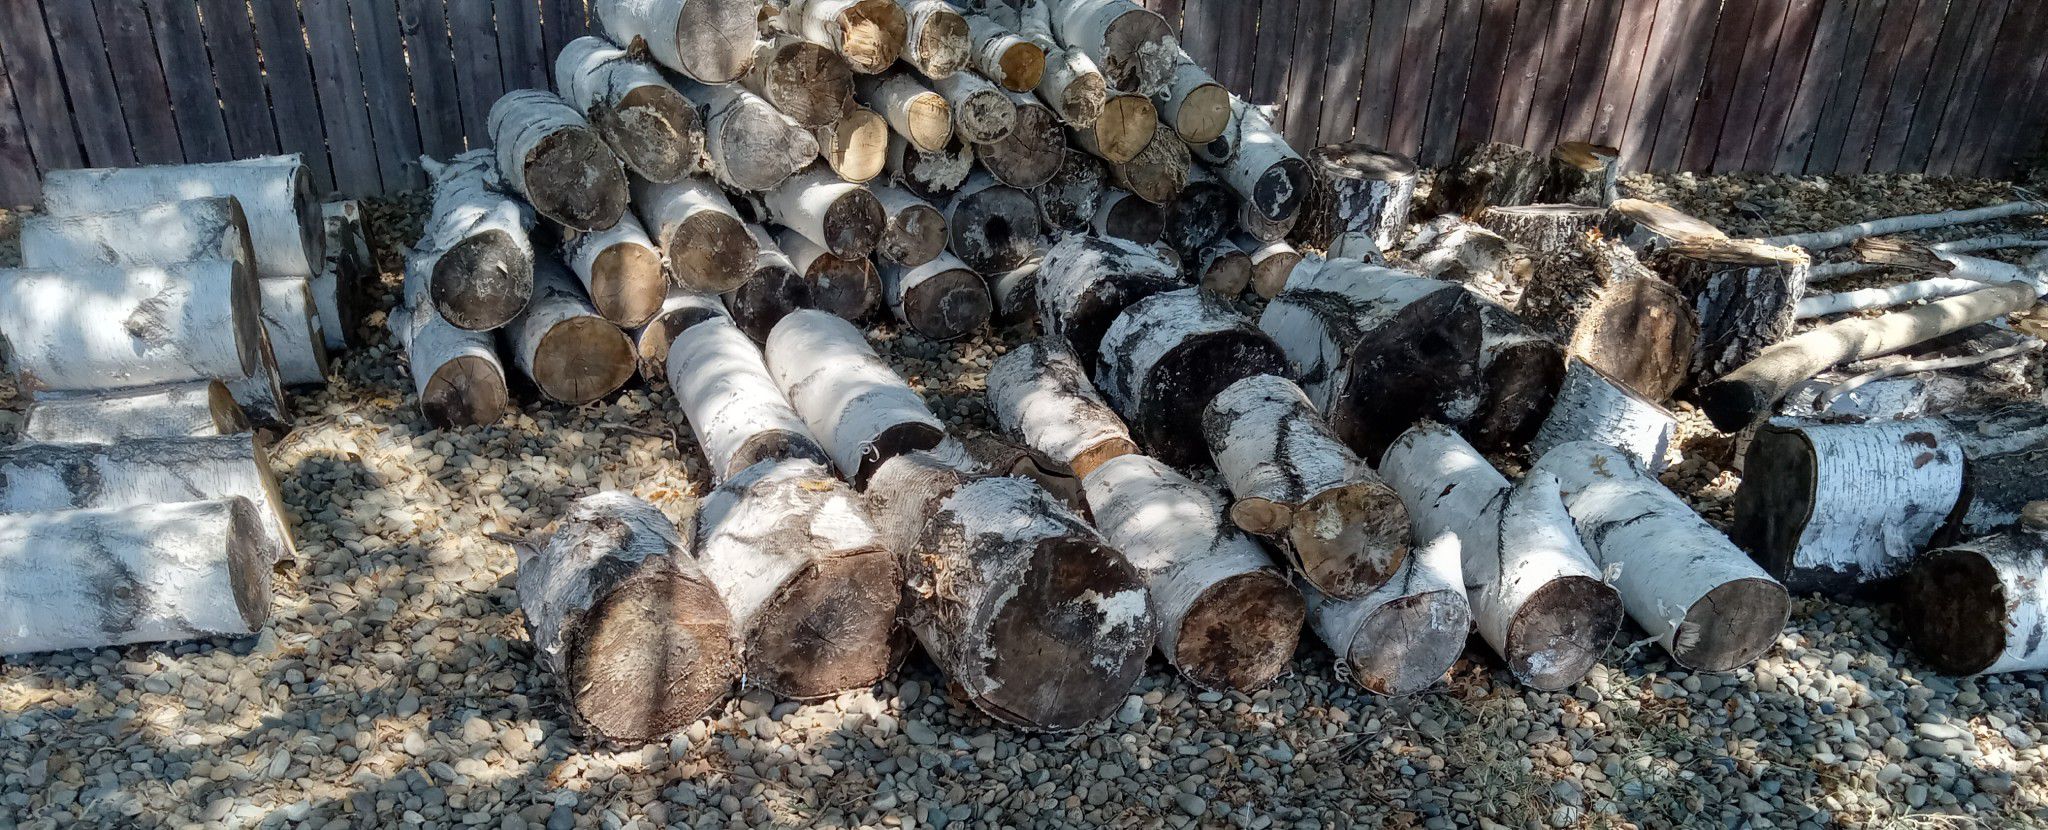 Birchwood, dried - make offer!  large variety